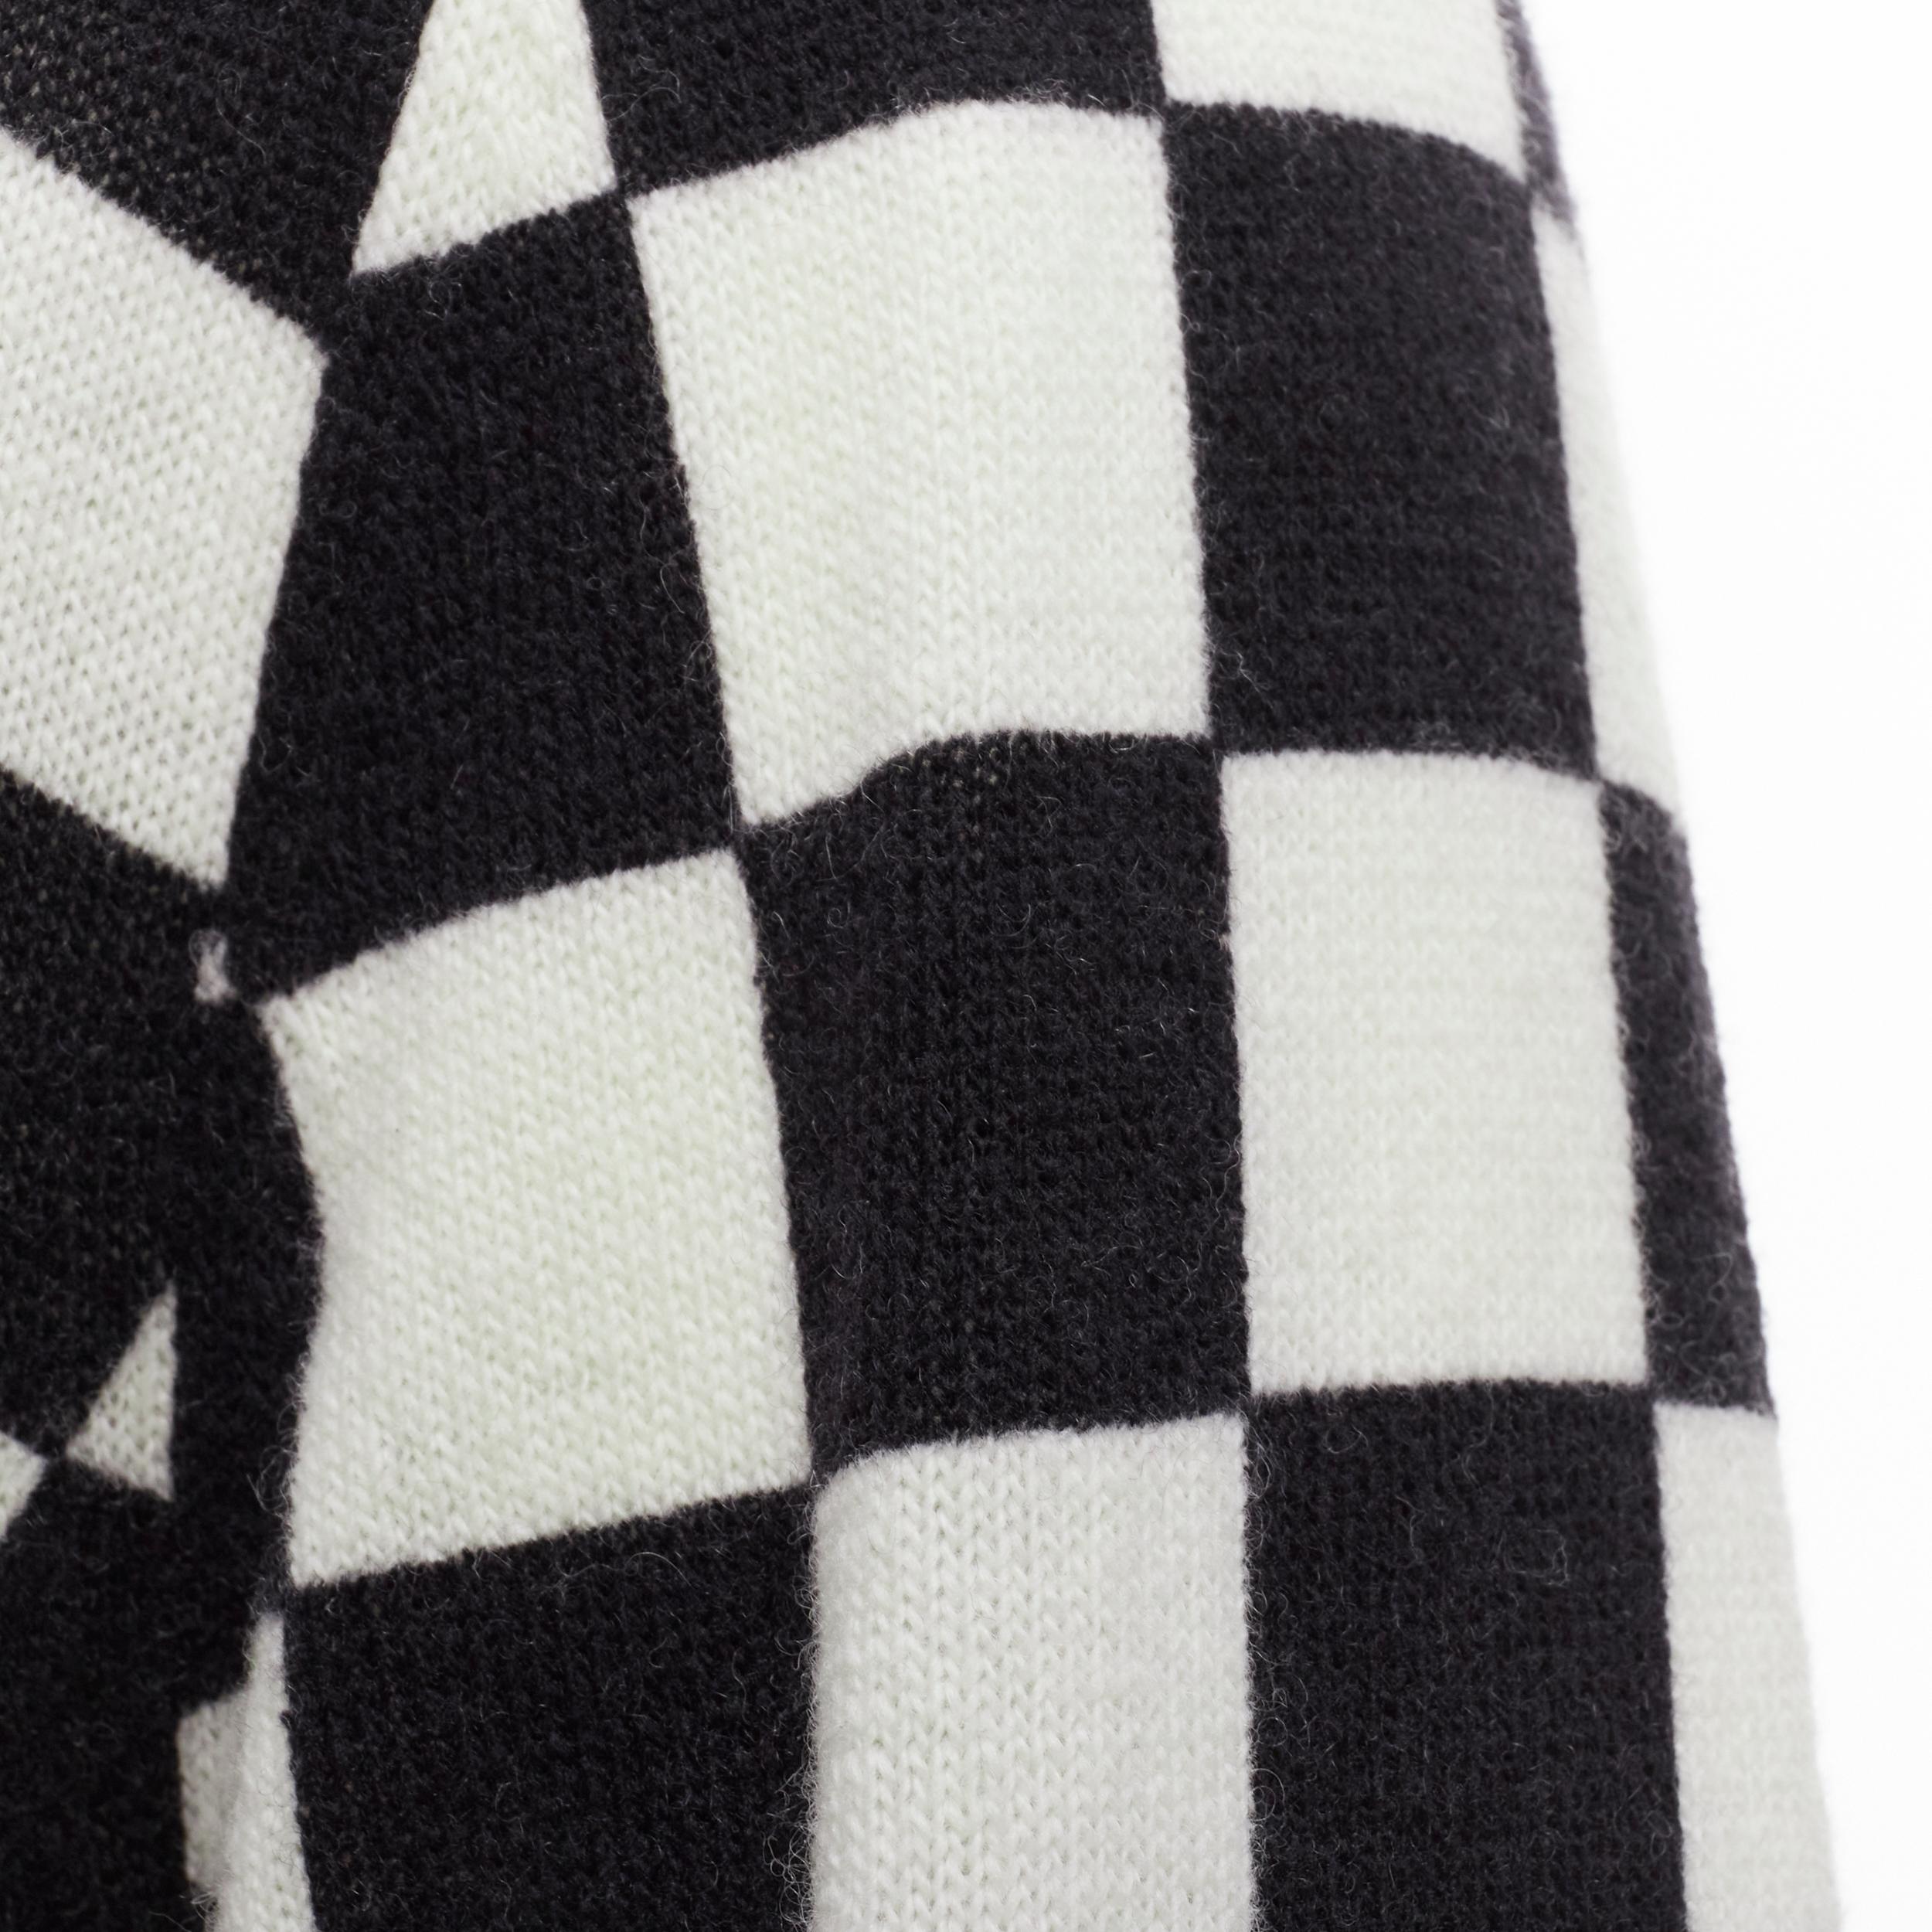 new CELINE Hedi Slimane 2019 Runway black white Damier checkered polo sweater M 1